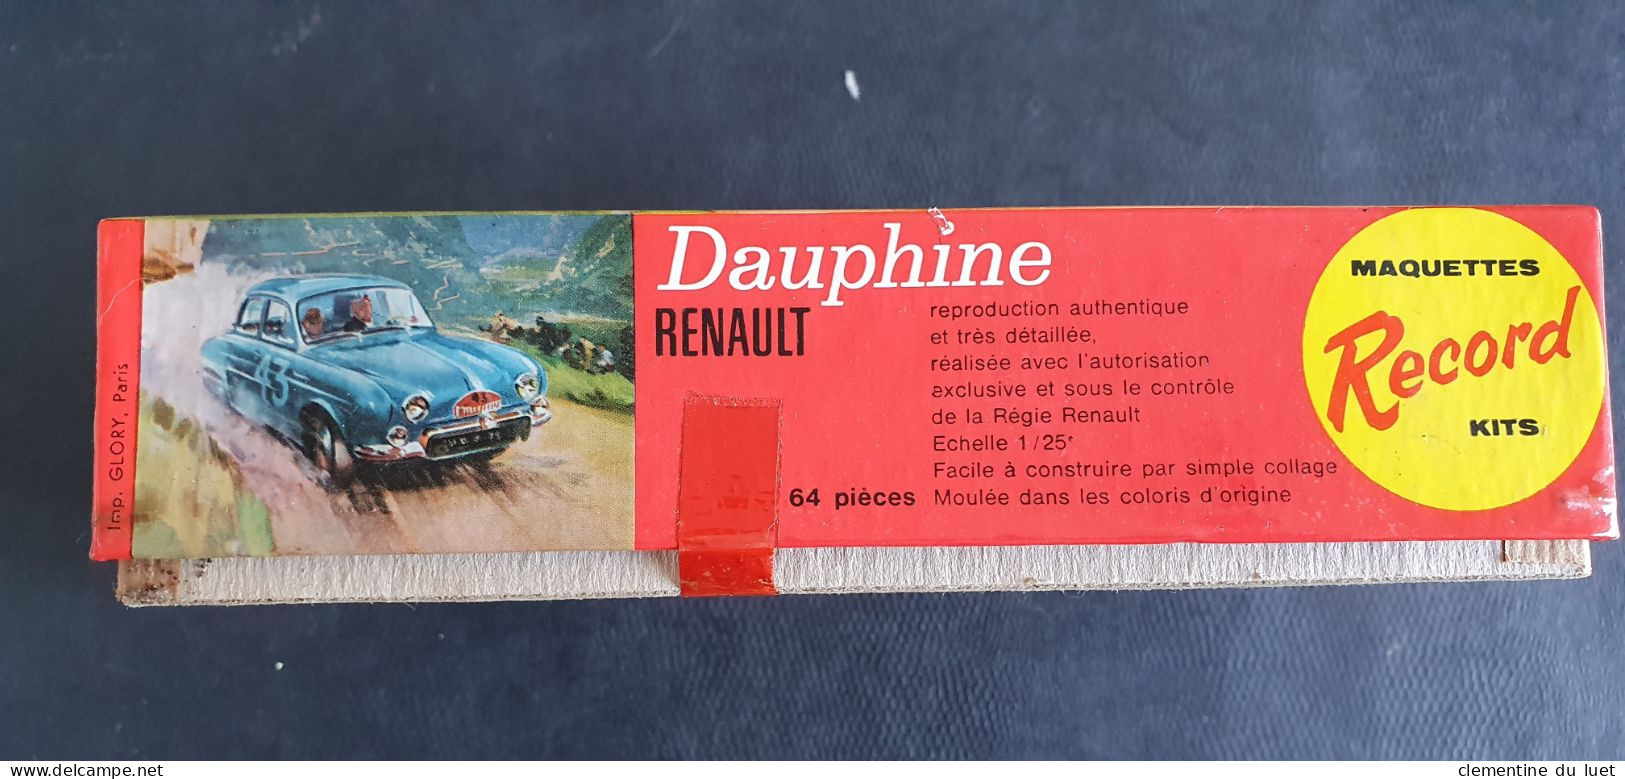 MAQUETTE RENAULT DAUPHINE RECORD KITS 64 PIECES ECHELLE 1 / 25 EME - Auto's